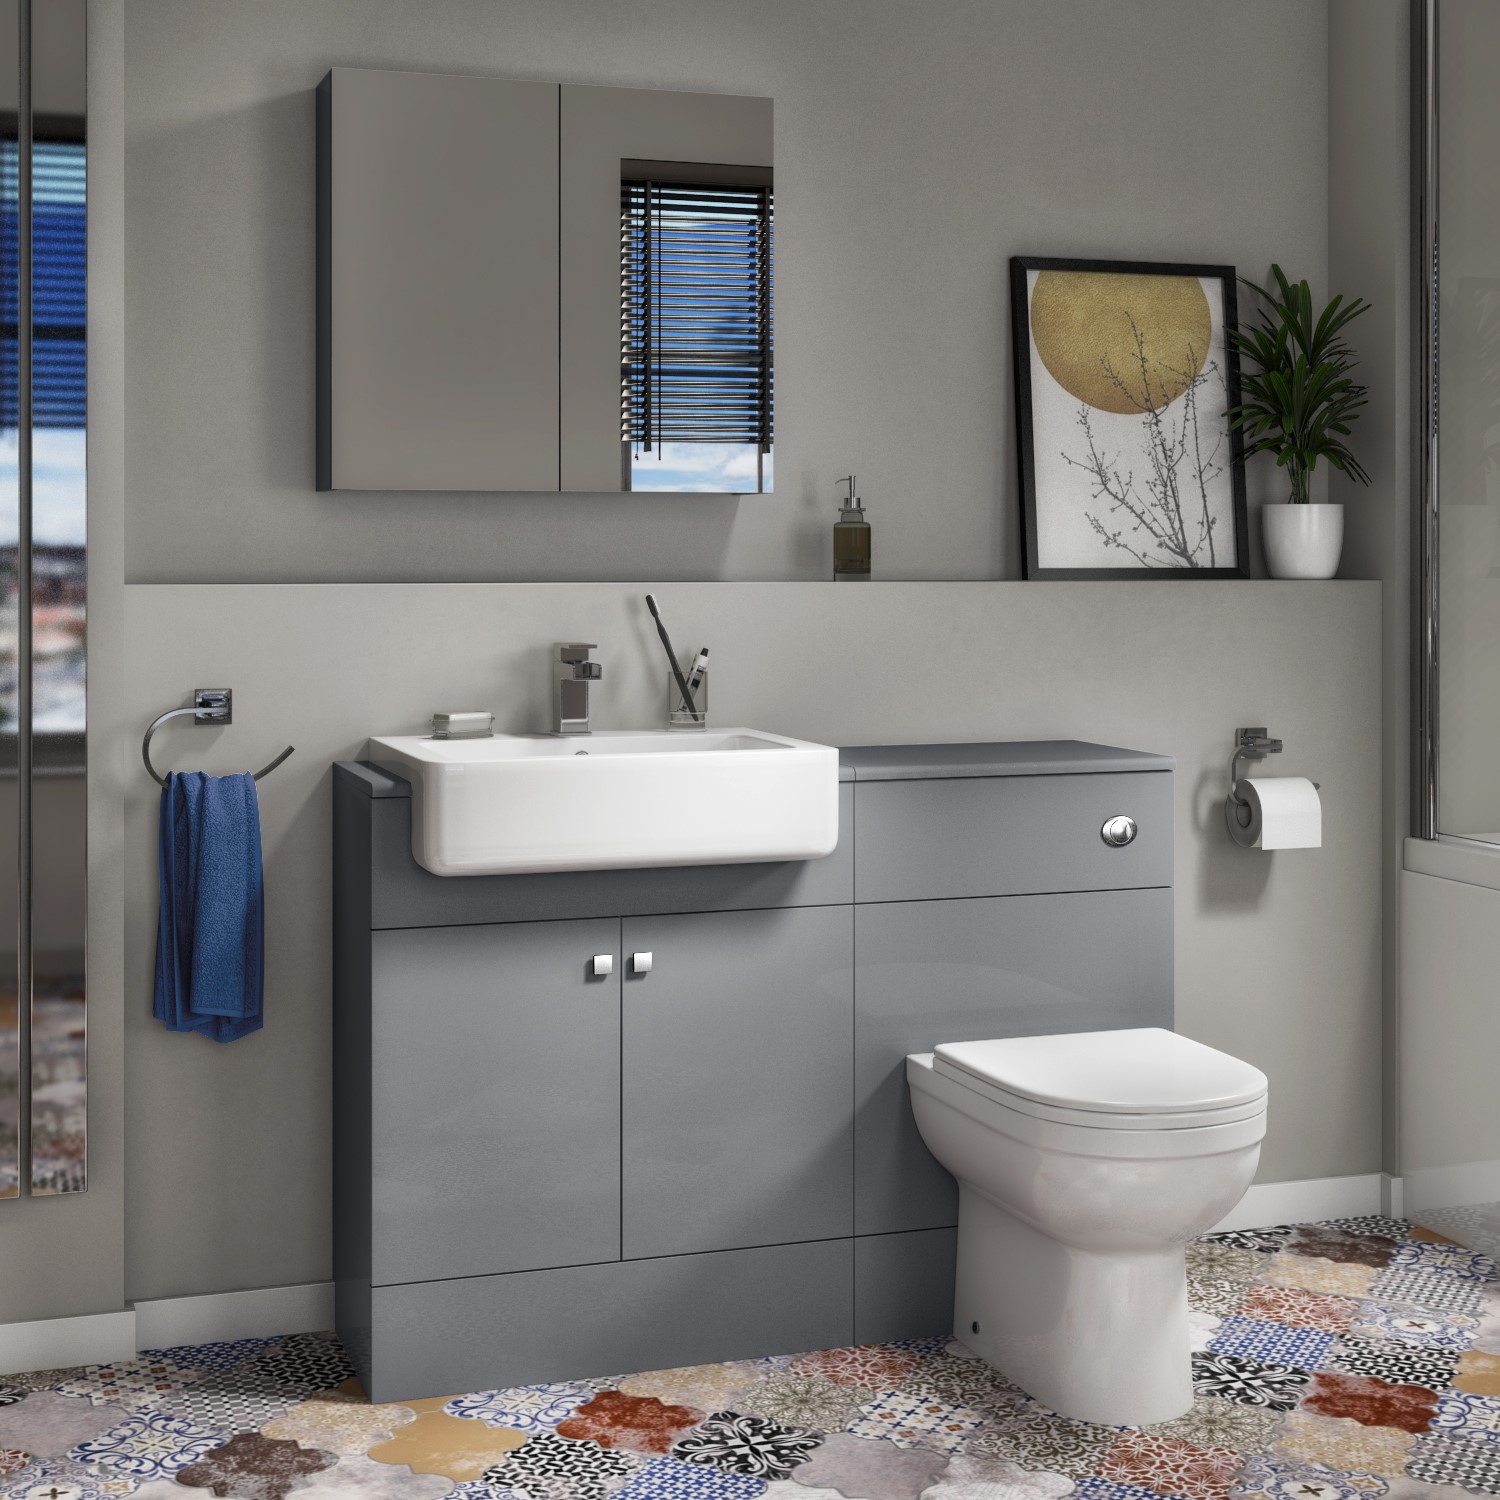 Sink Unit With Round Toilet Harper, Bathroom Vanity Units With Toilet